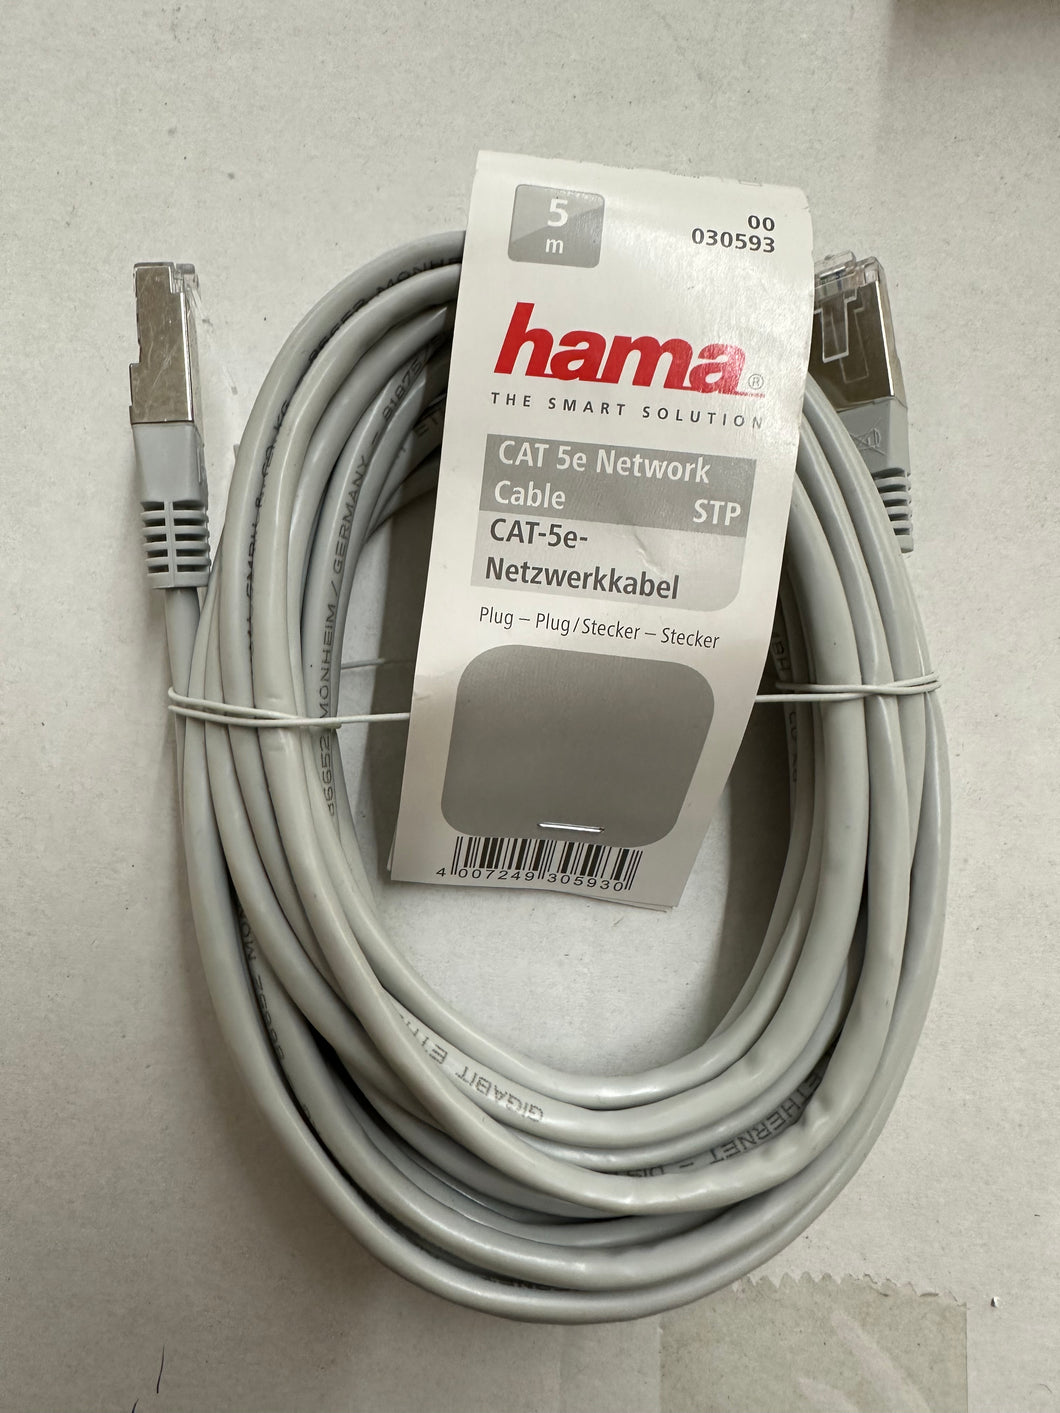 HAMA CAT-5e-Netzwerkkabel STP, 5,00 m (00030593)